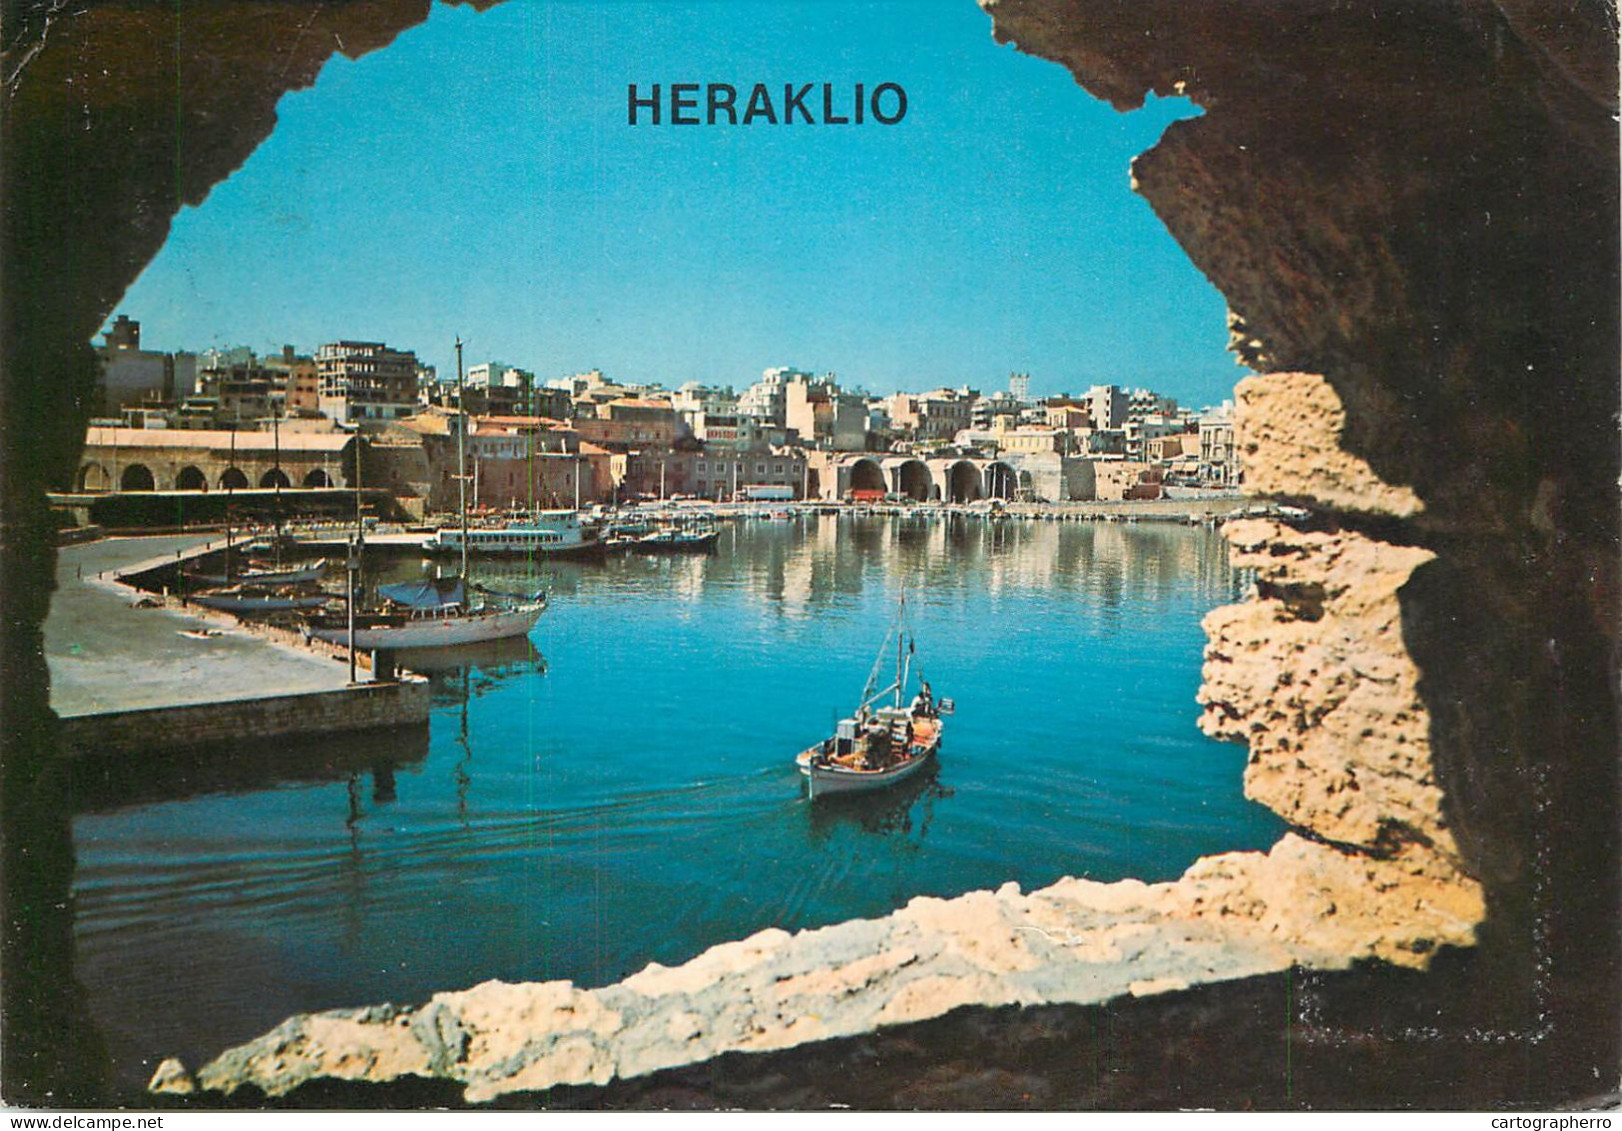 Navigation Sailing Vessels & Boats Themed Postcard Heraklio Boat - Sailing Vessels